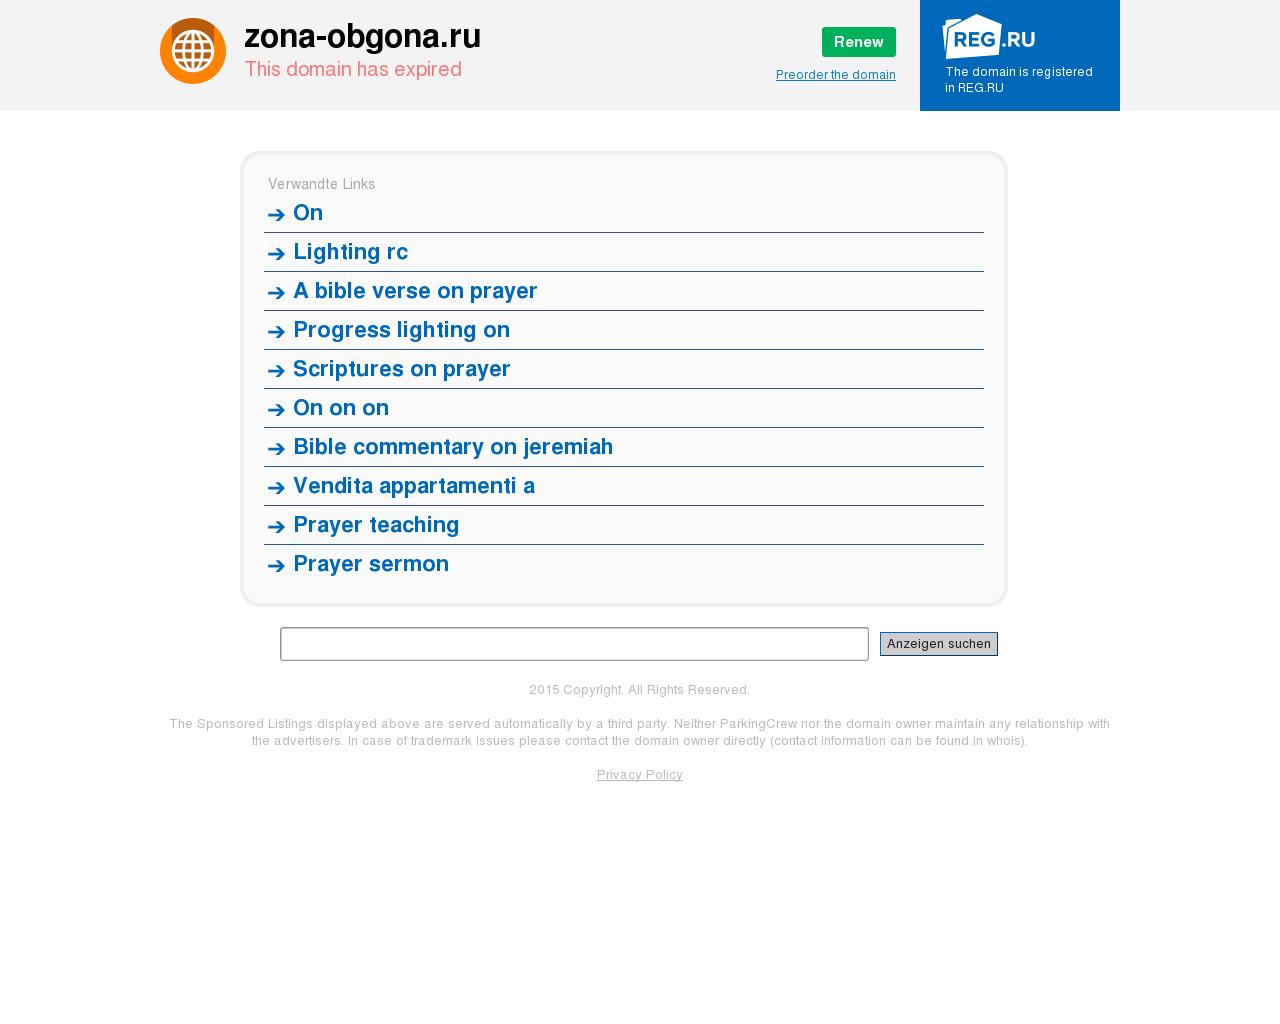 Изображение сайта zona-obgona.ru в разрешении 1280x1024